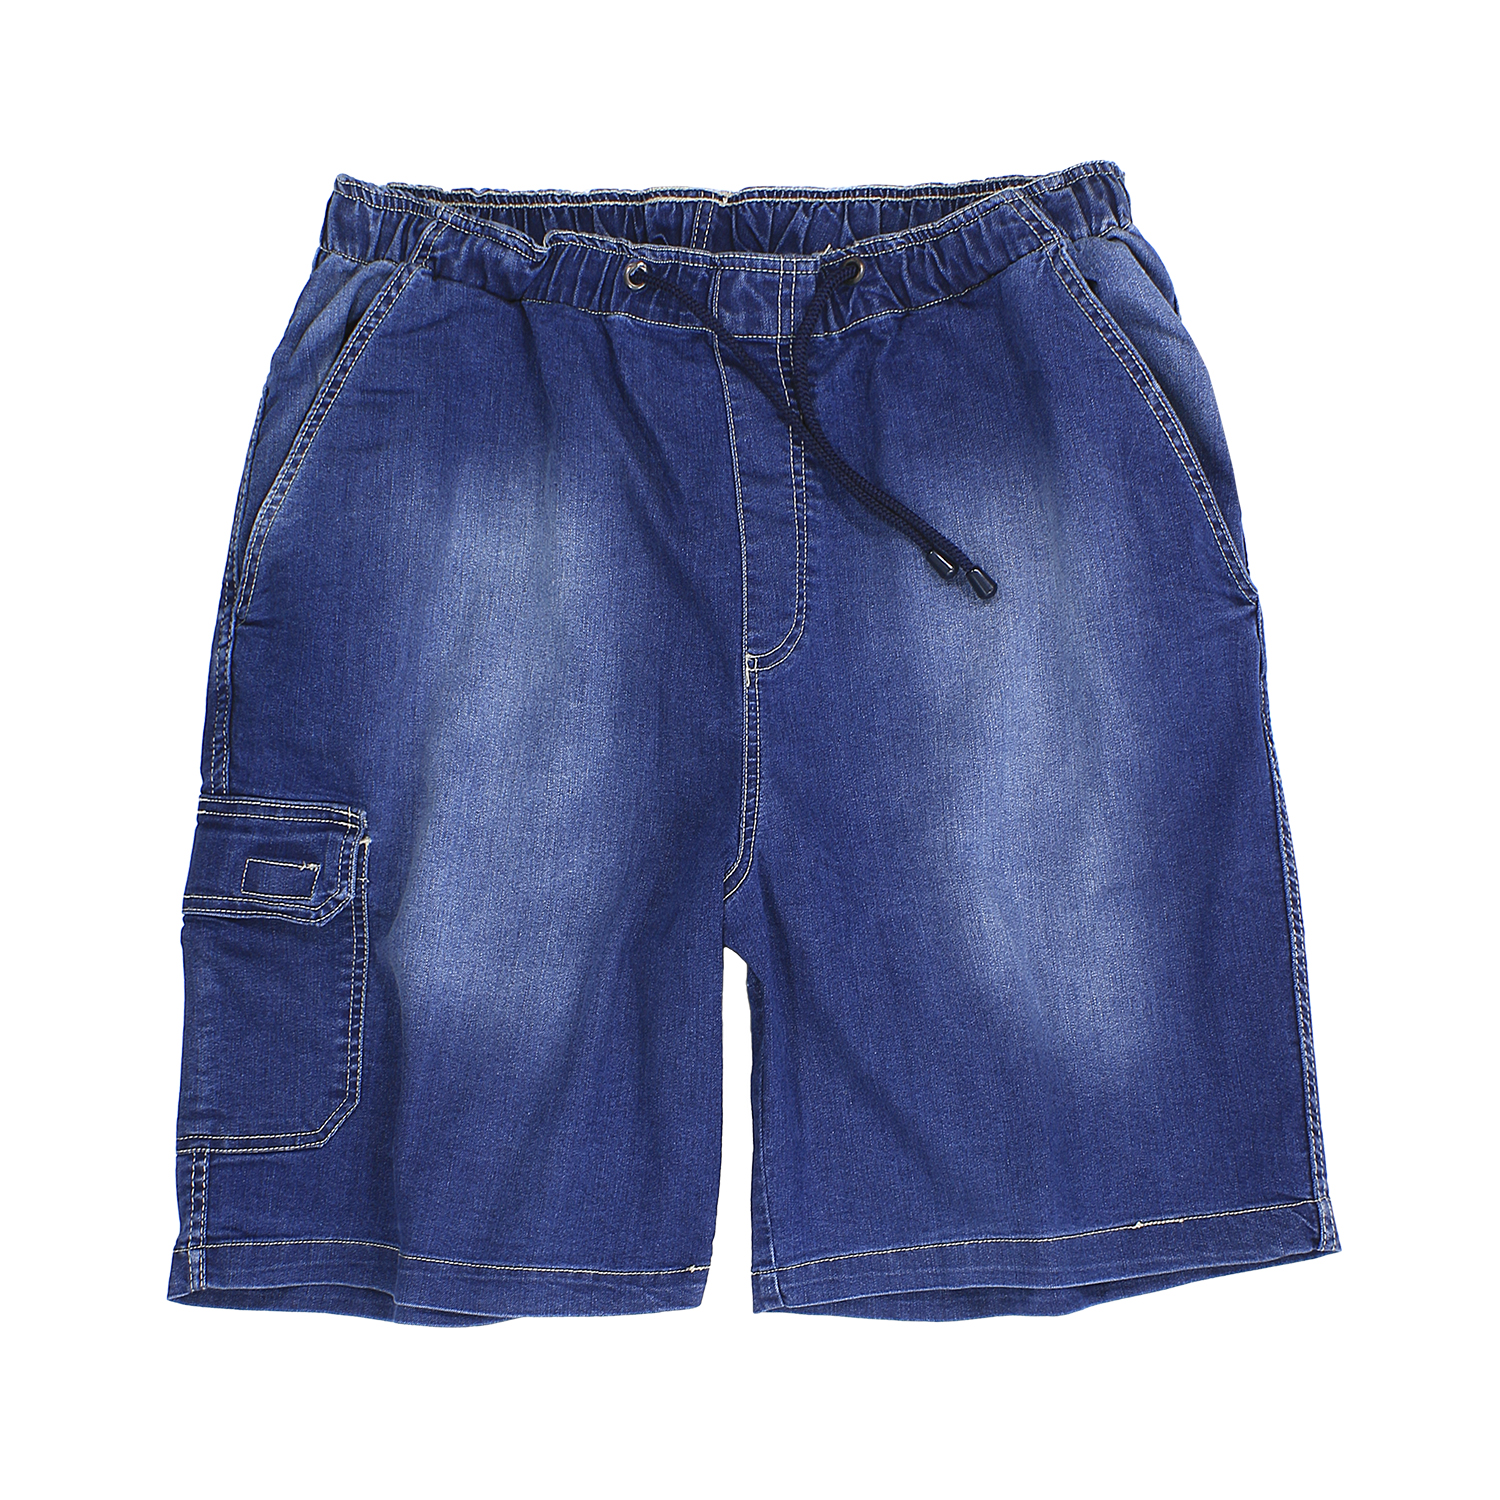 Cargo Jeans Bermuda stonewash by Abraxas in oversizes up to 10XL